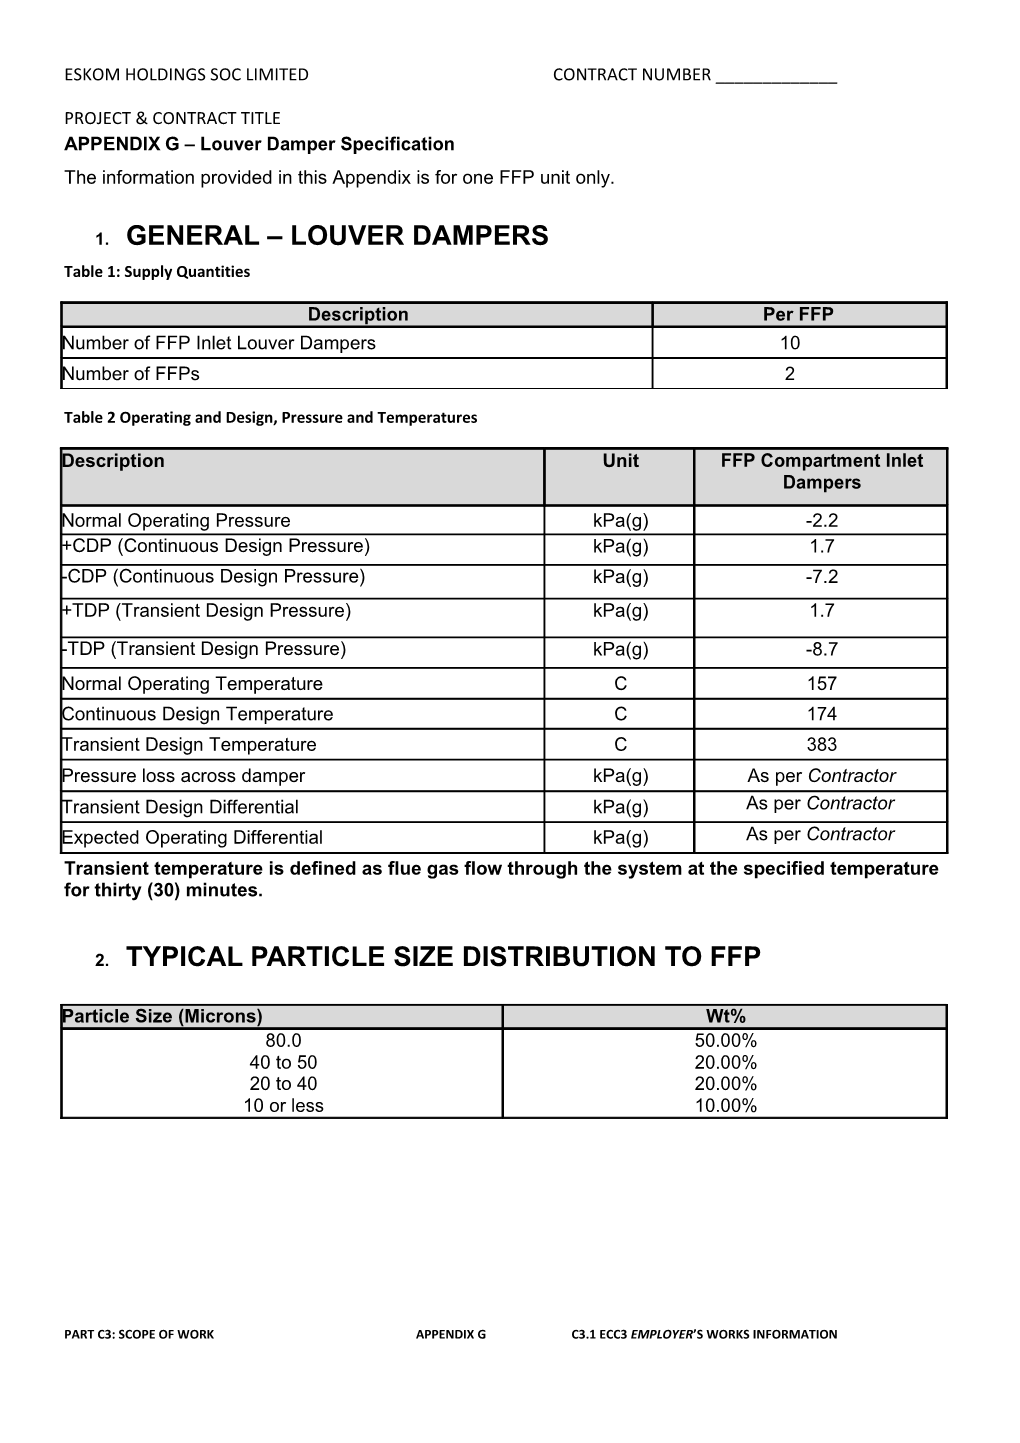 Eskom Louver Damper Technical Specification Rev 0